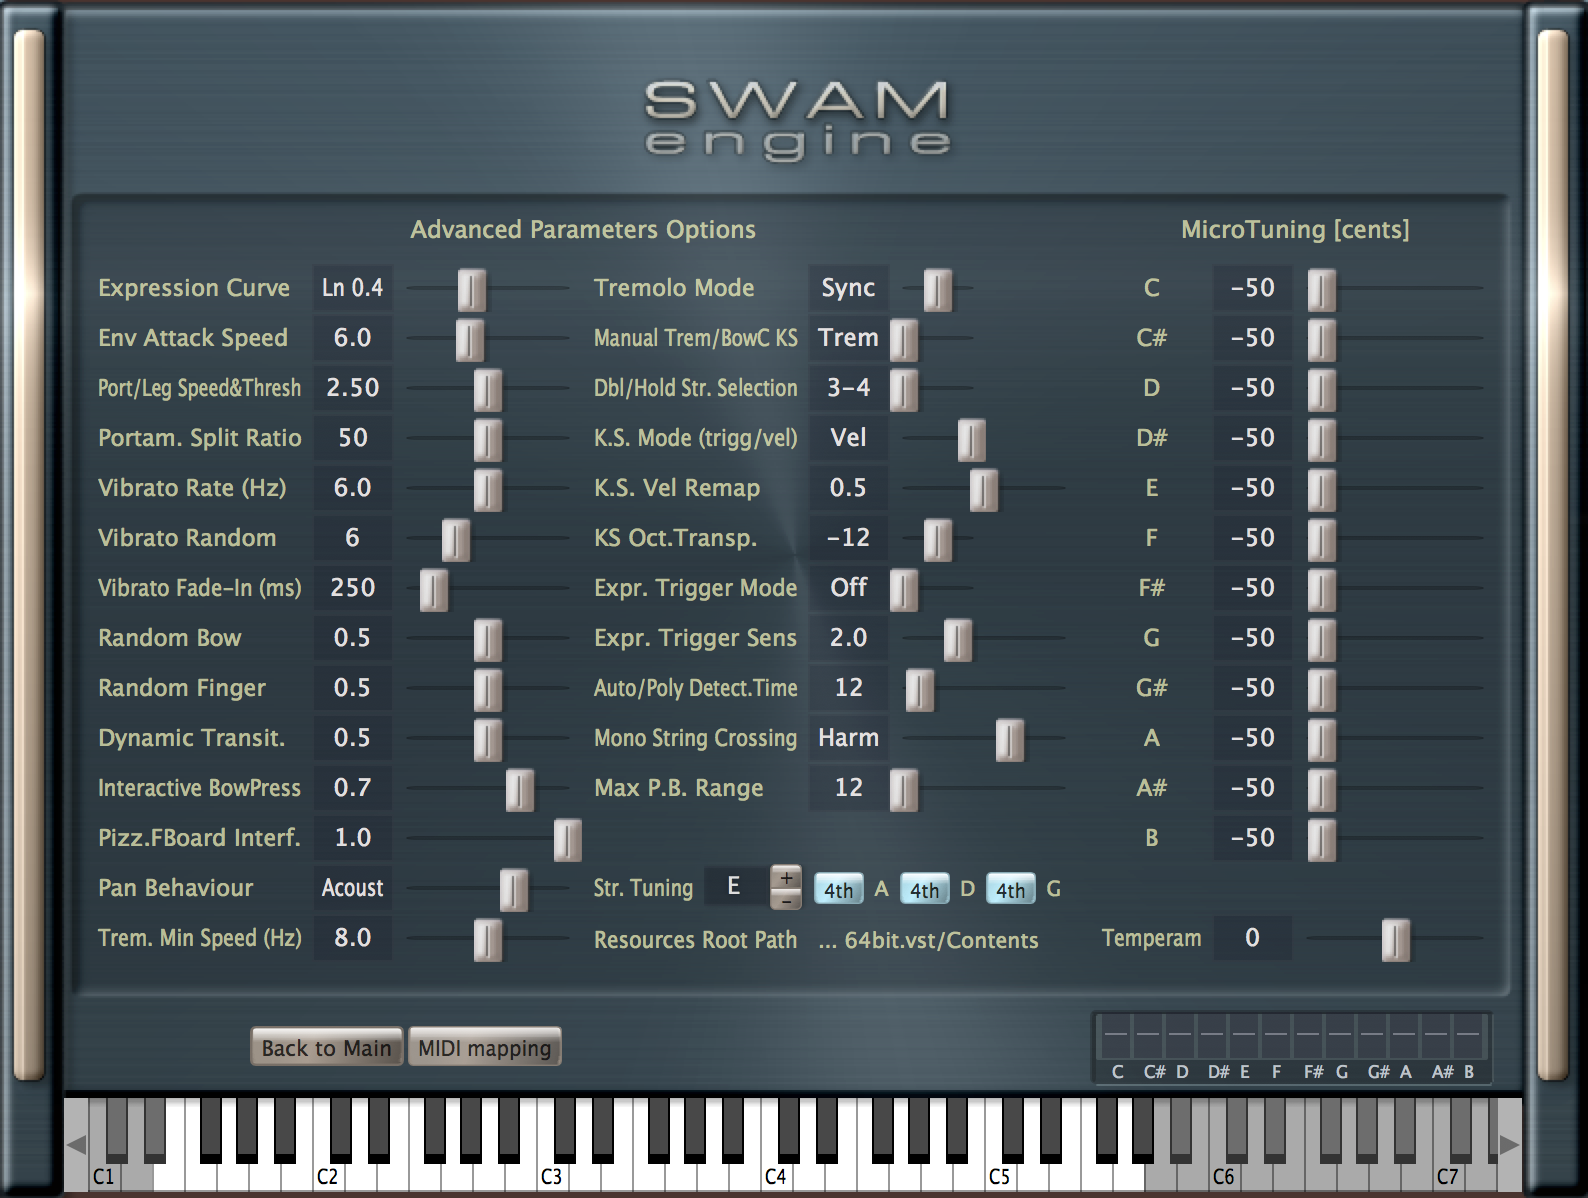 SWAM Saxophones v3 Upgrade from v2